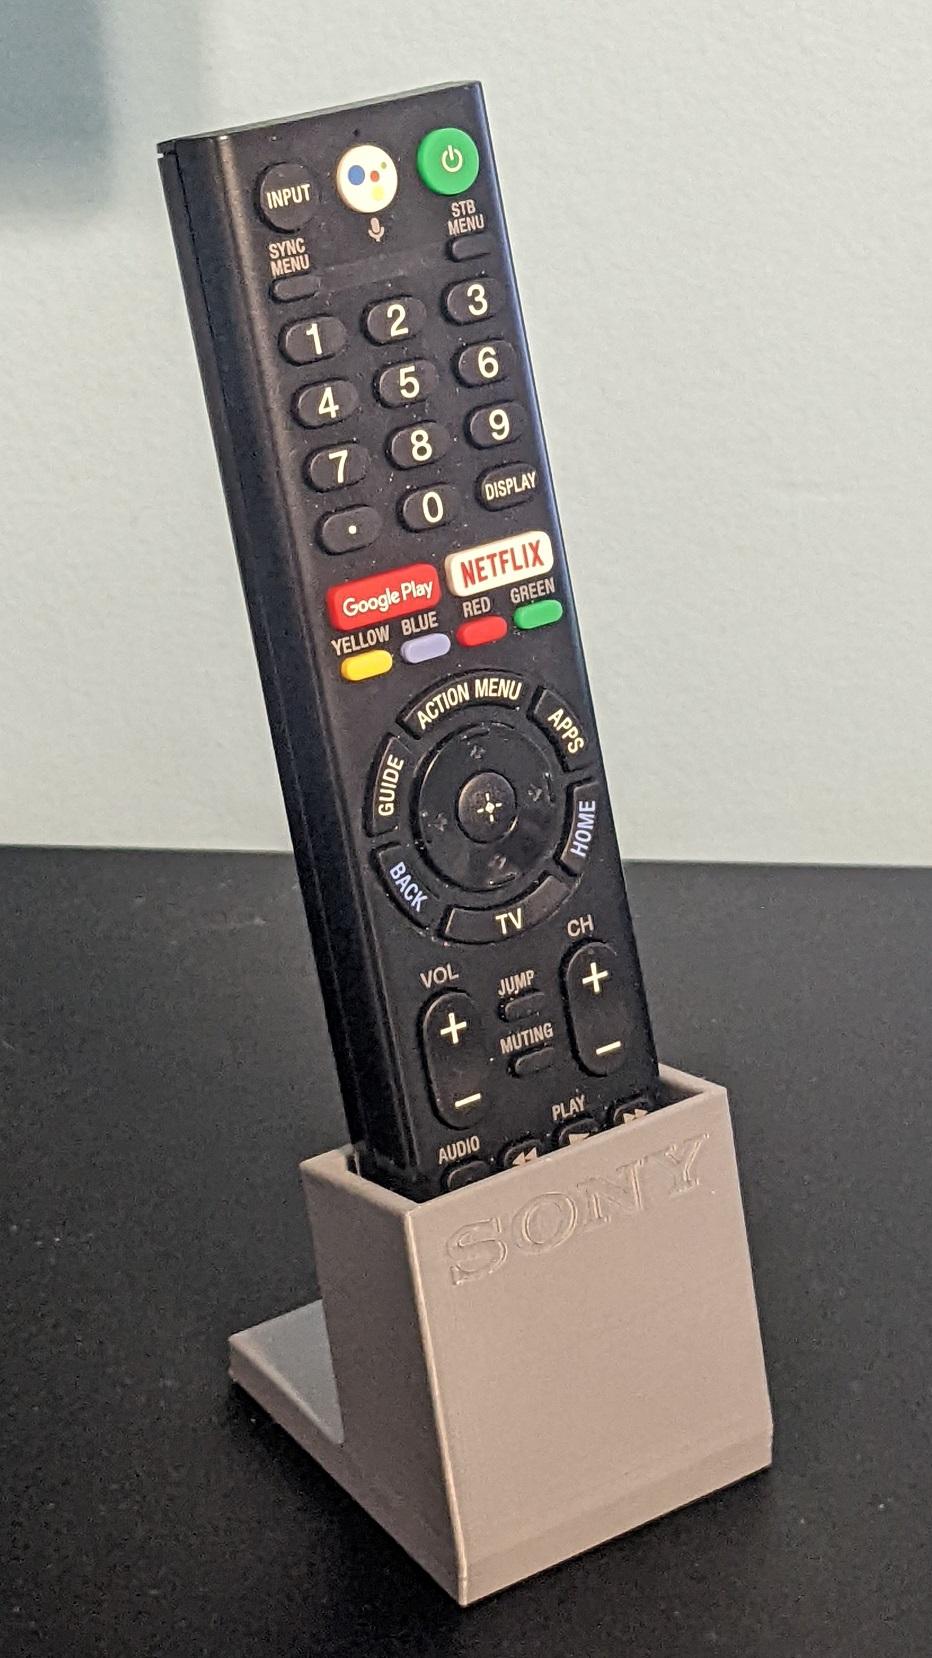 Sony TV remote holder for RMF-TX310U or similar 3d model